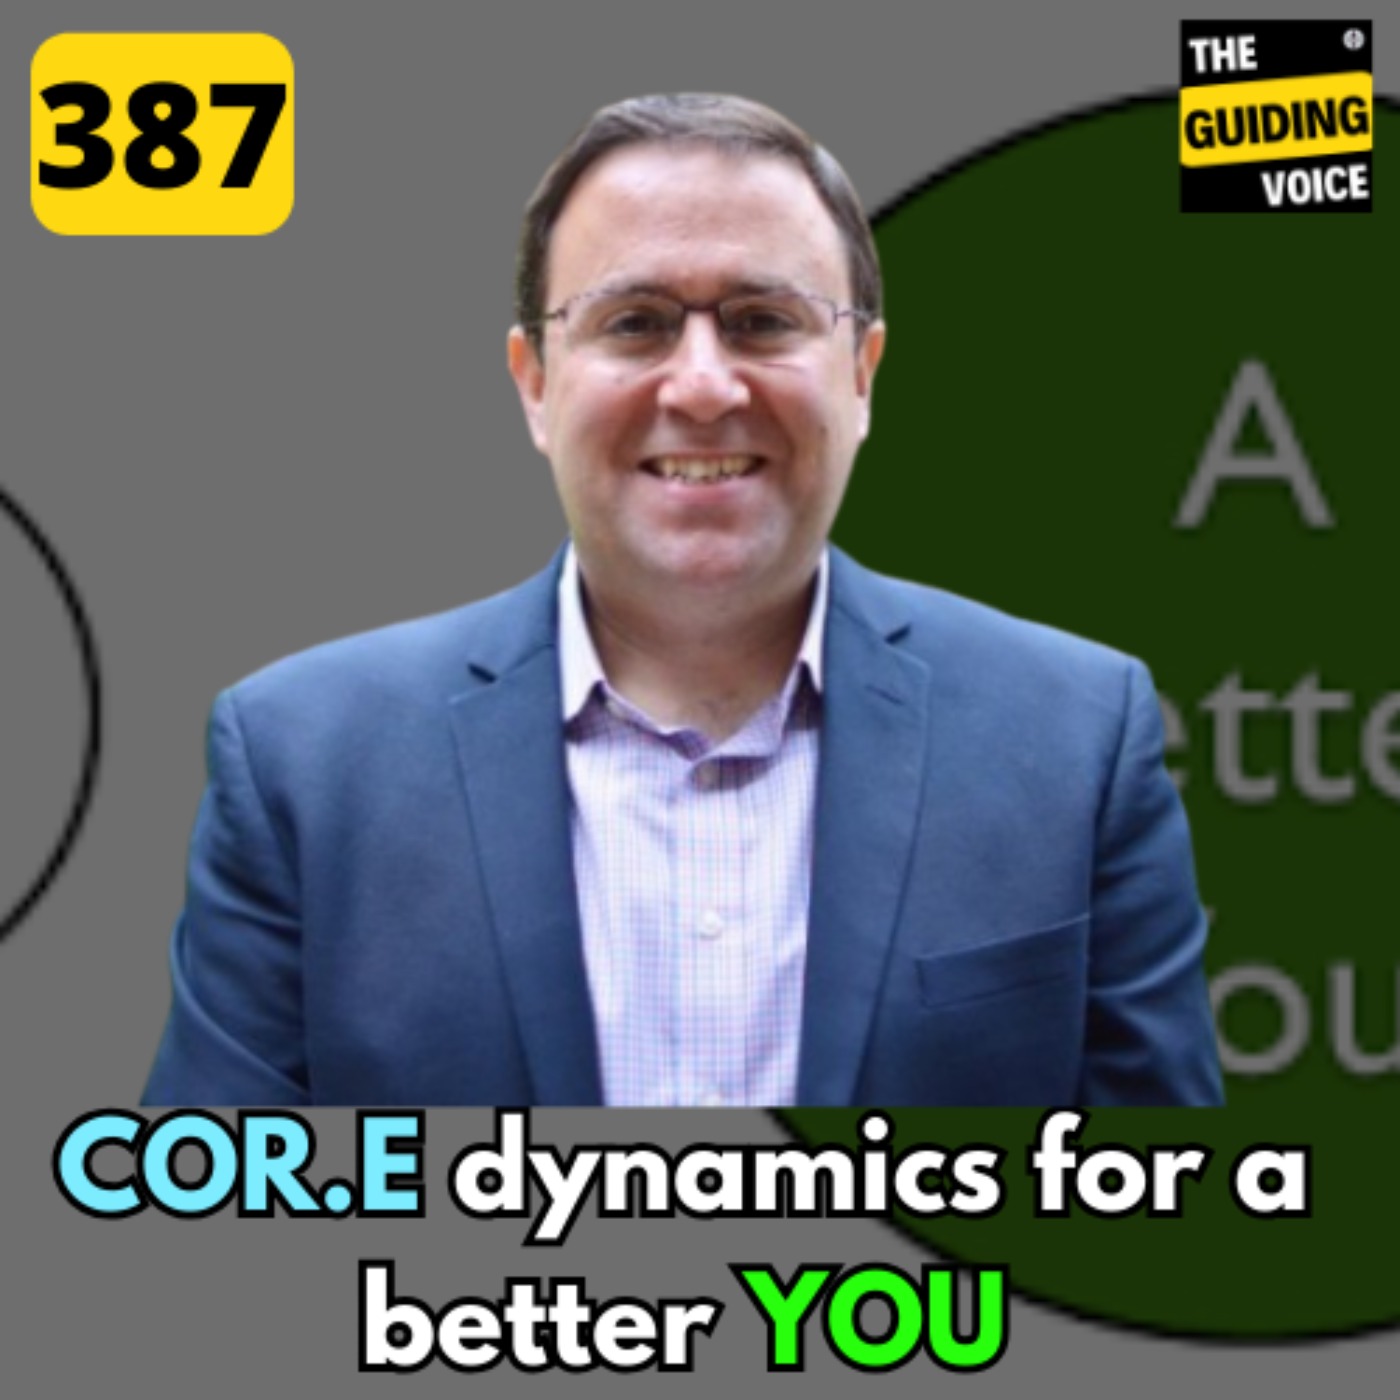 COR.E dynamics for a better YOU | Alec Pearson | #TGV387